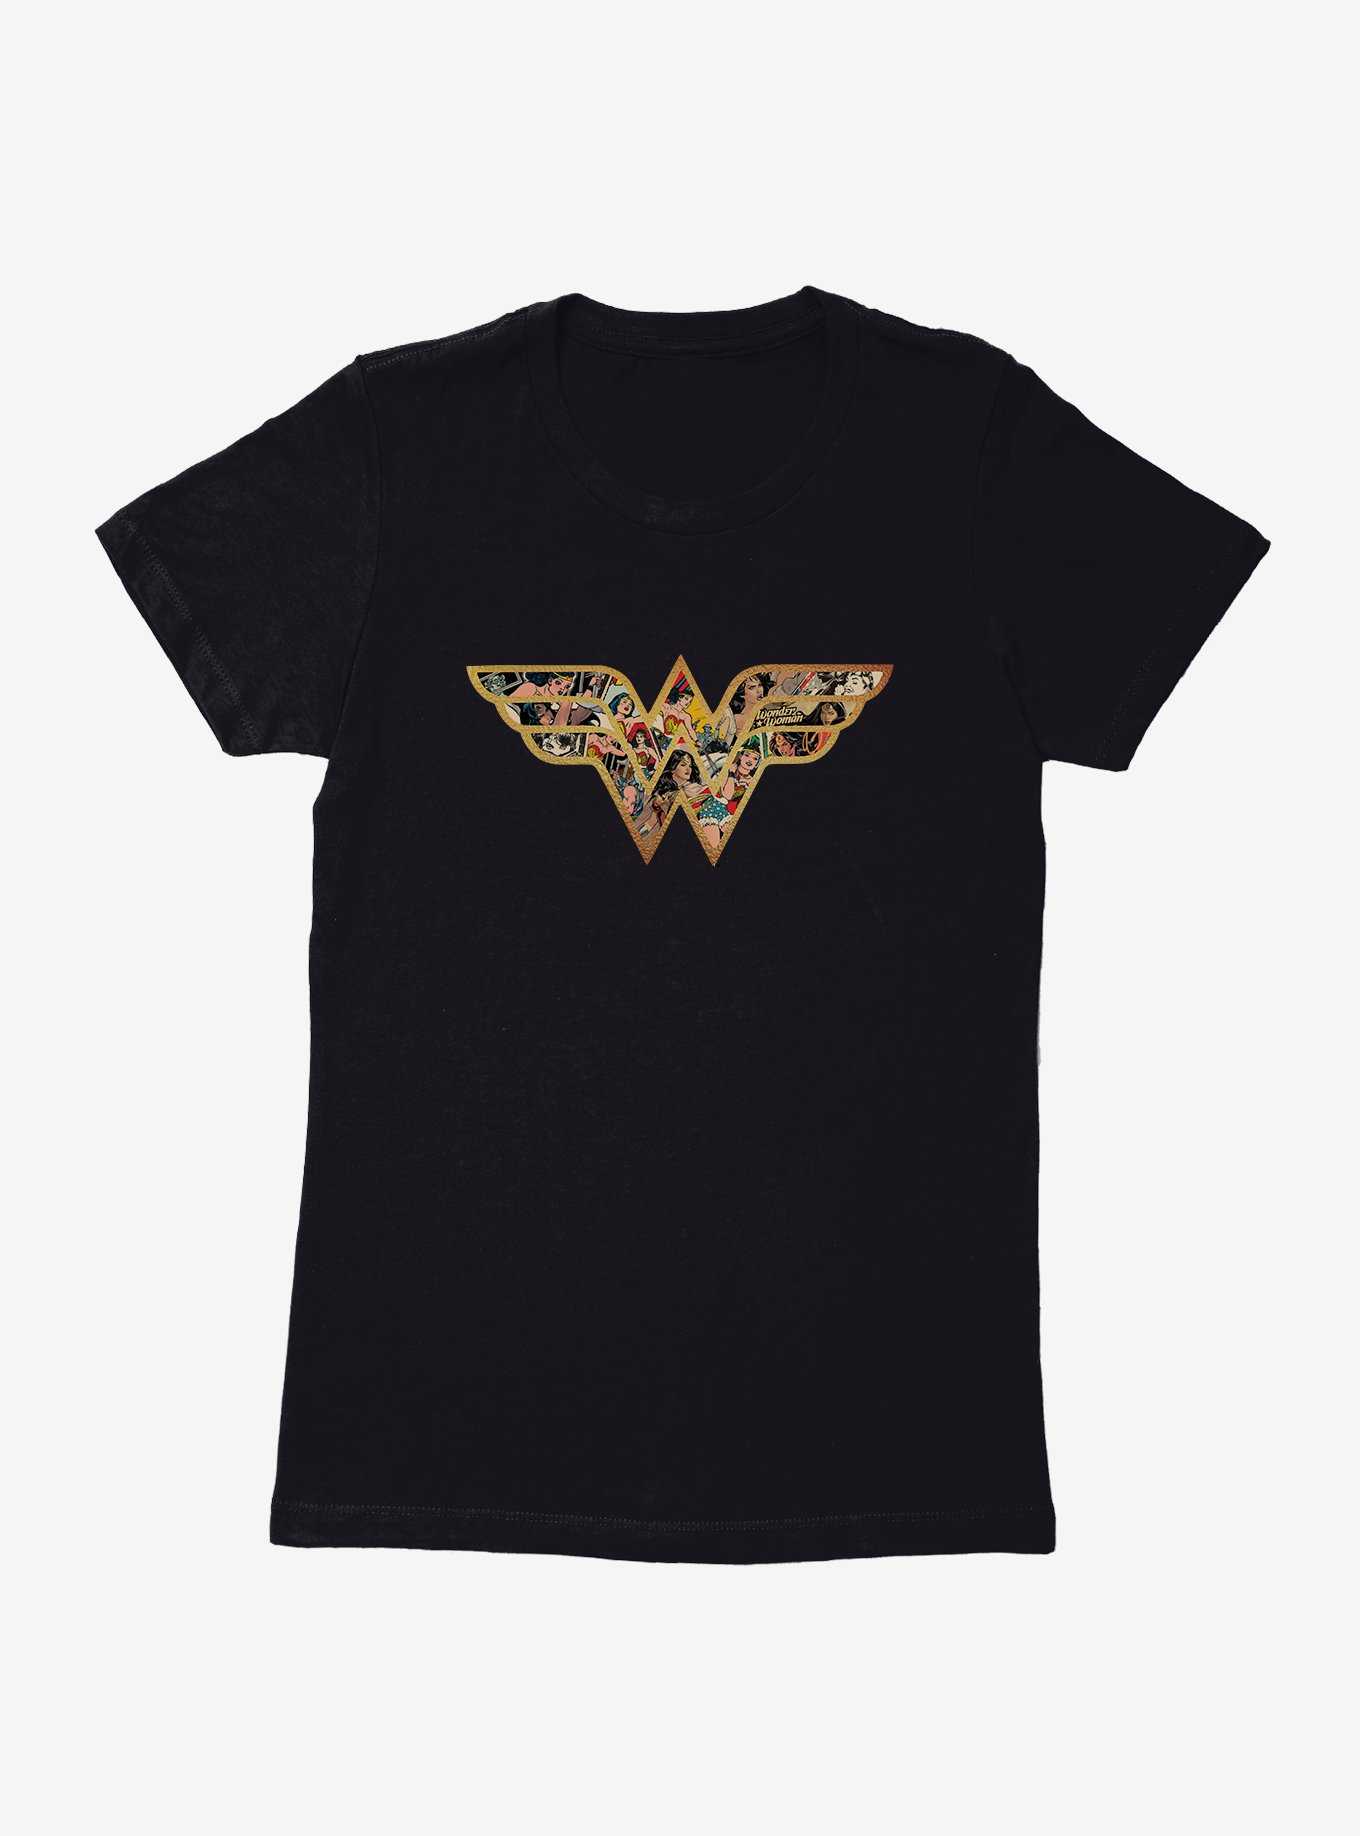 DC Comics Wonder Woman Tile Logo Womens T-Shirt, , hi-res